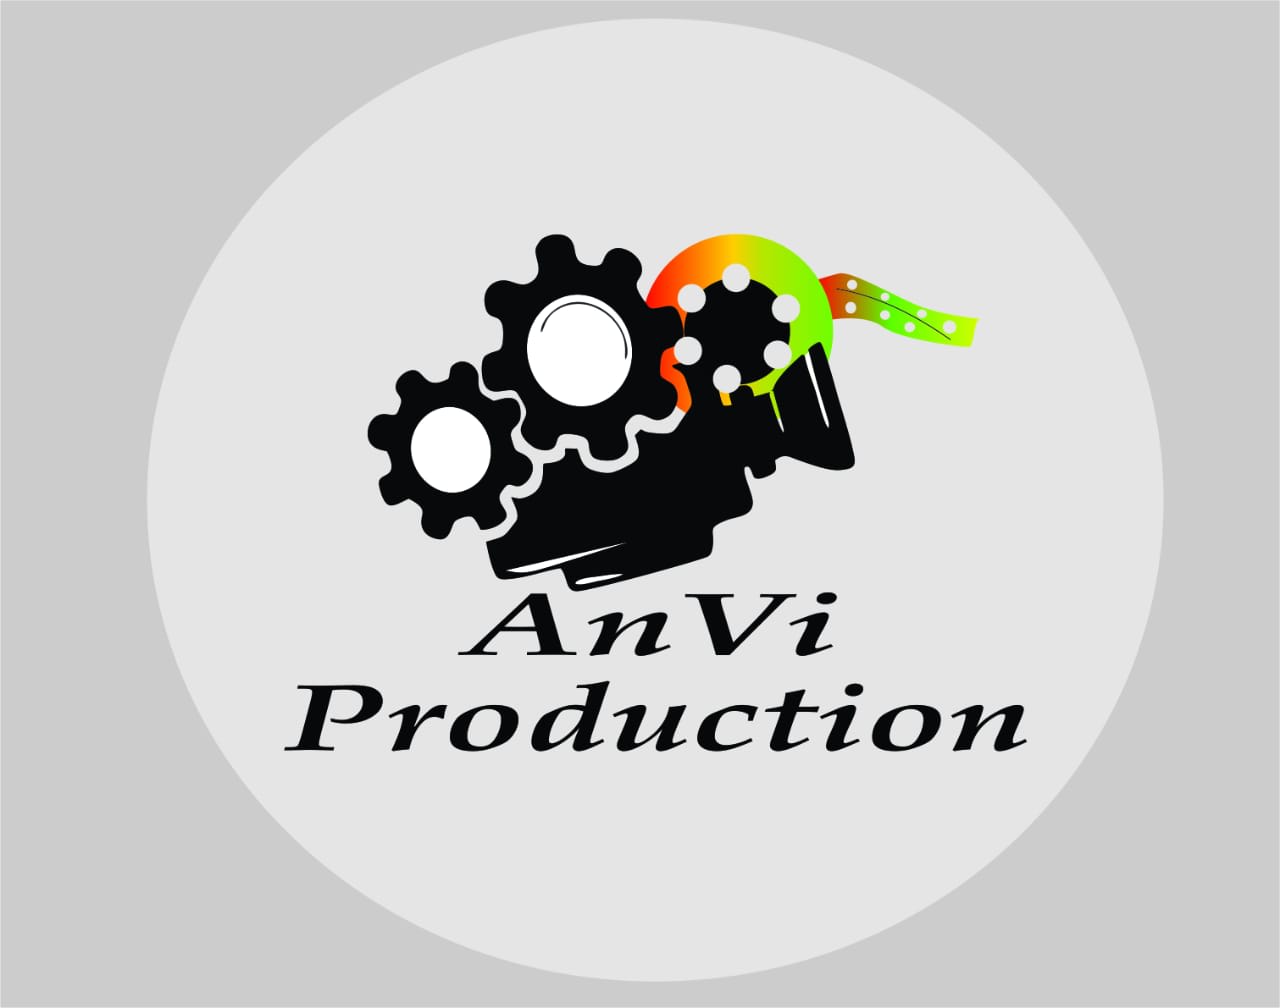 AnVi Production